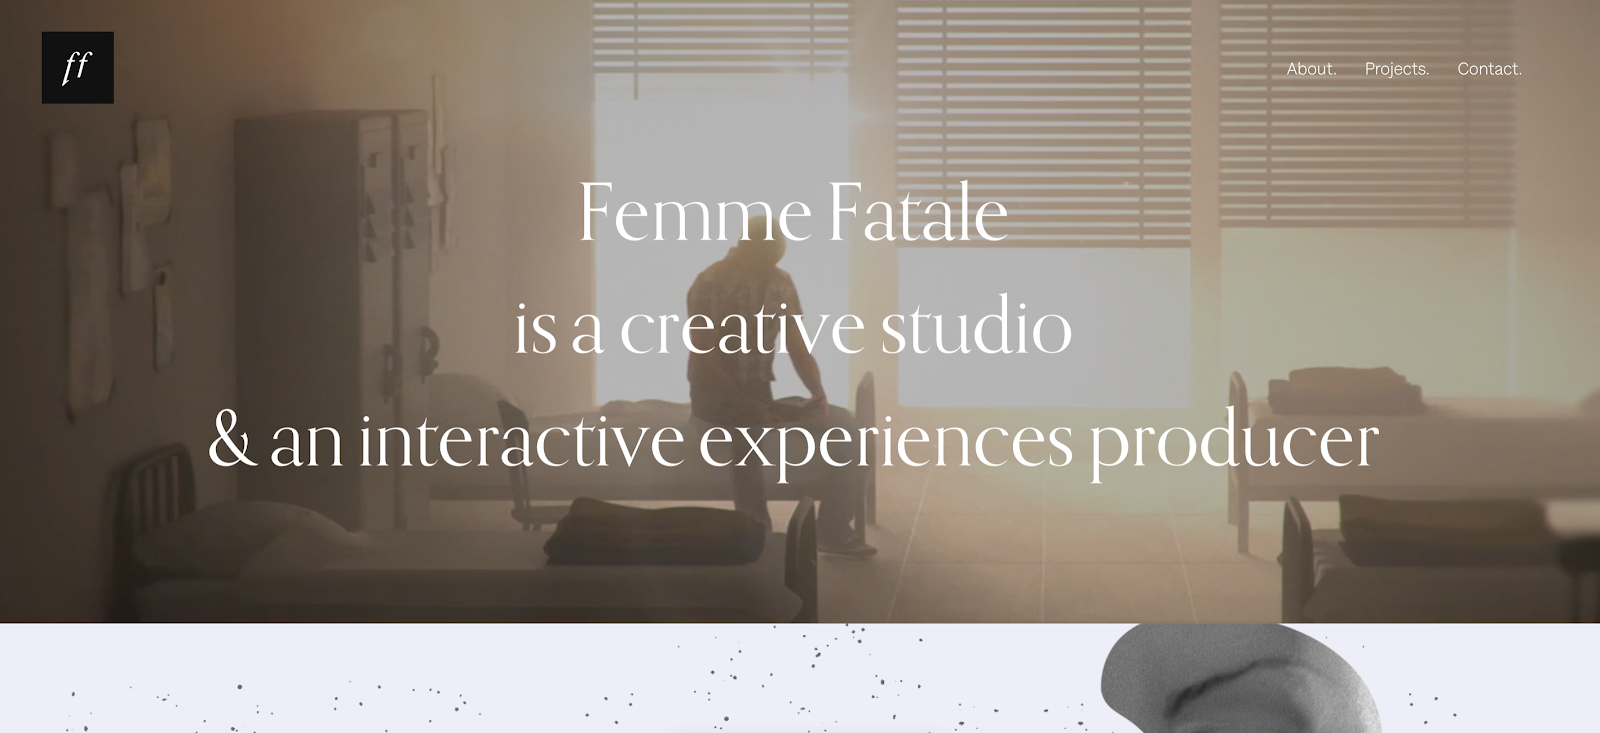 Portafolio de desarrollador web de Femme Fatale